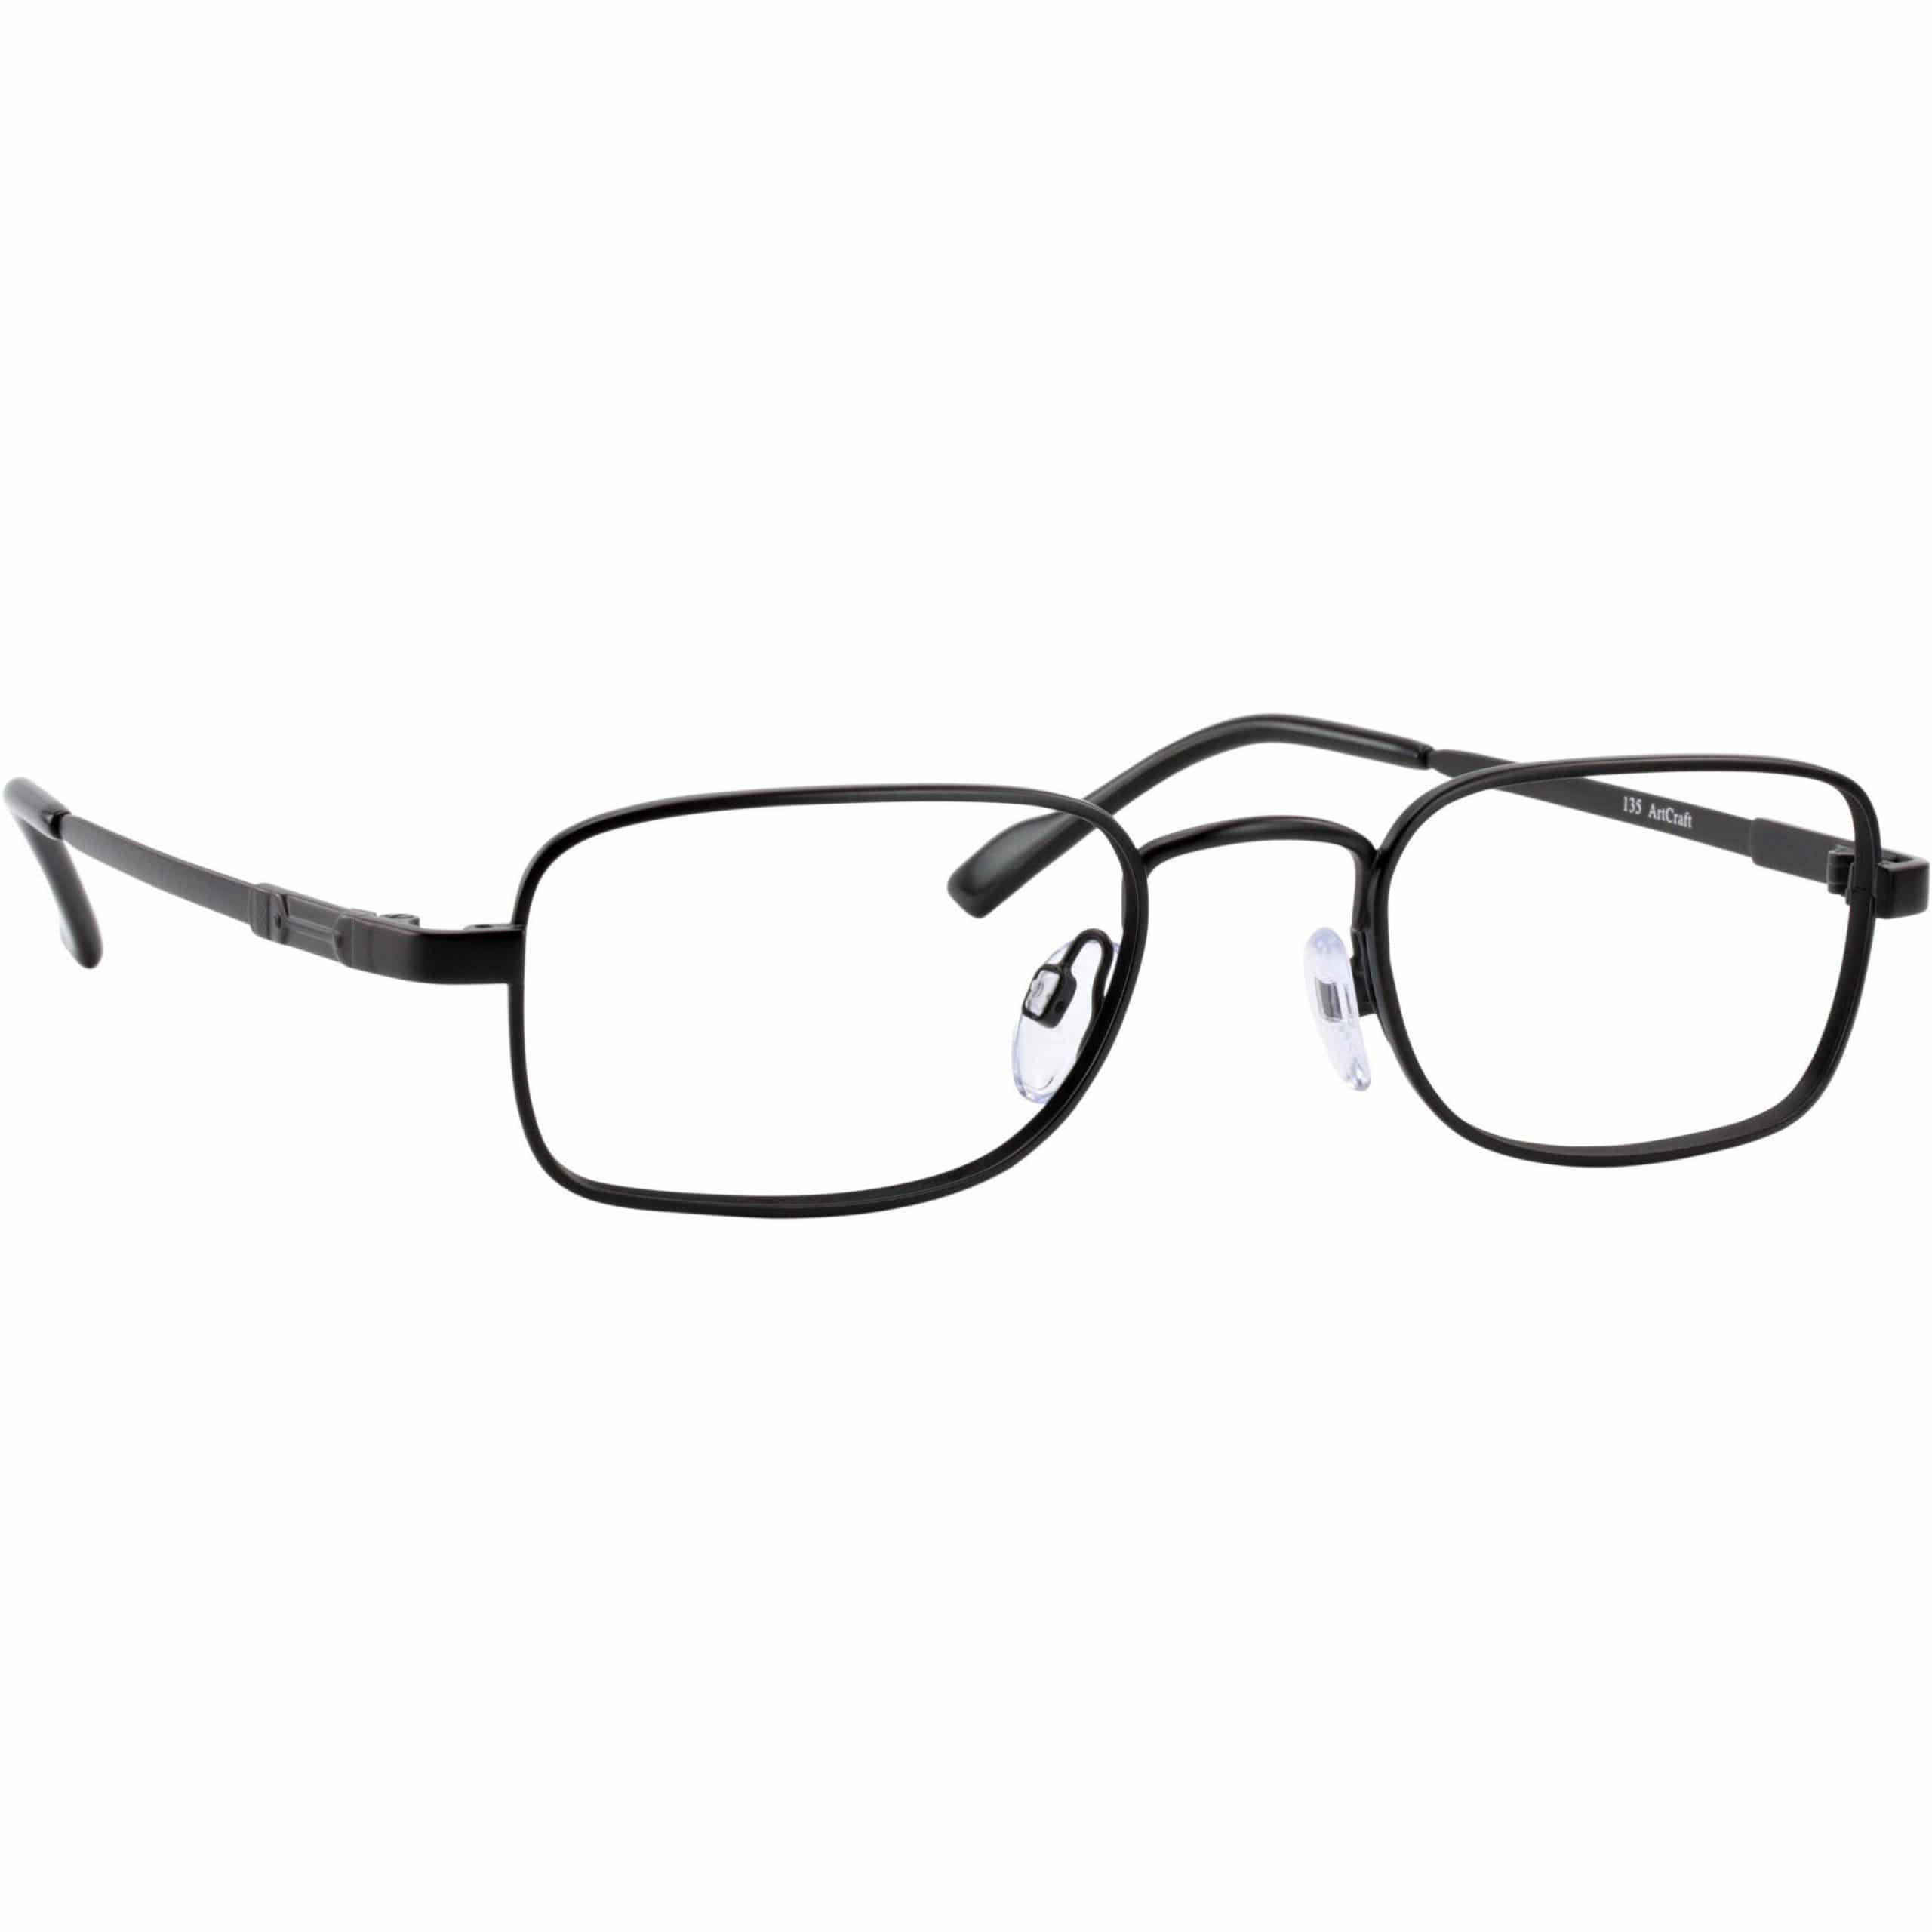 Art-Craft USA Workforce 953SF Eyeglasses - Safety Protection Glasses